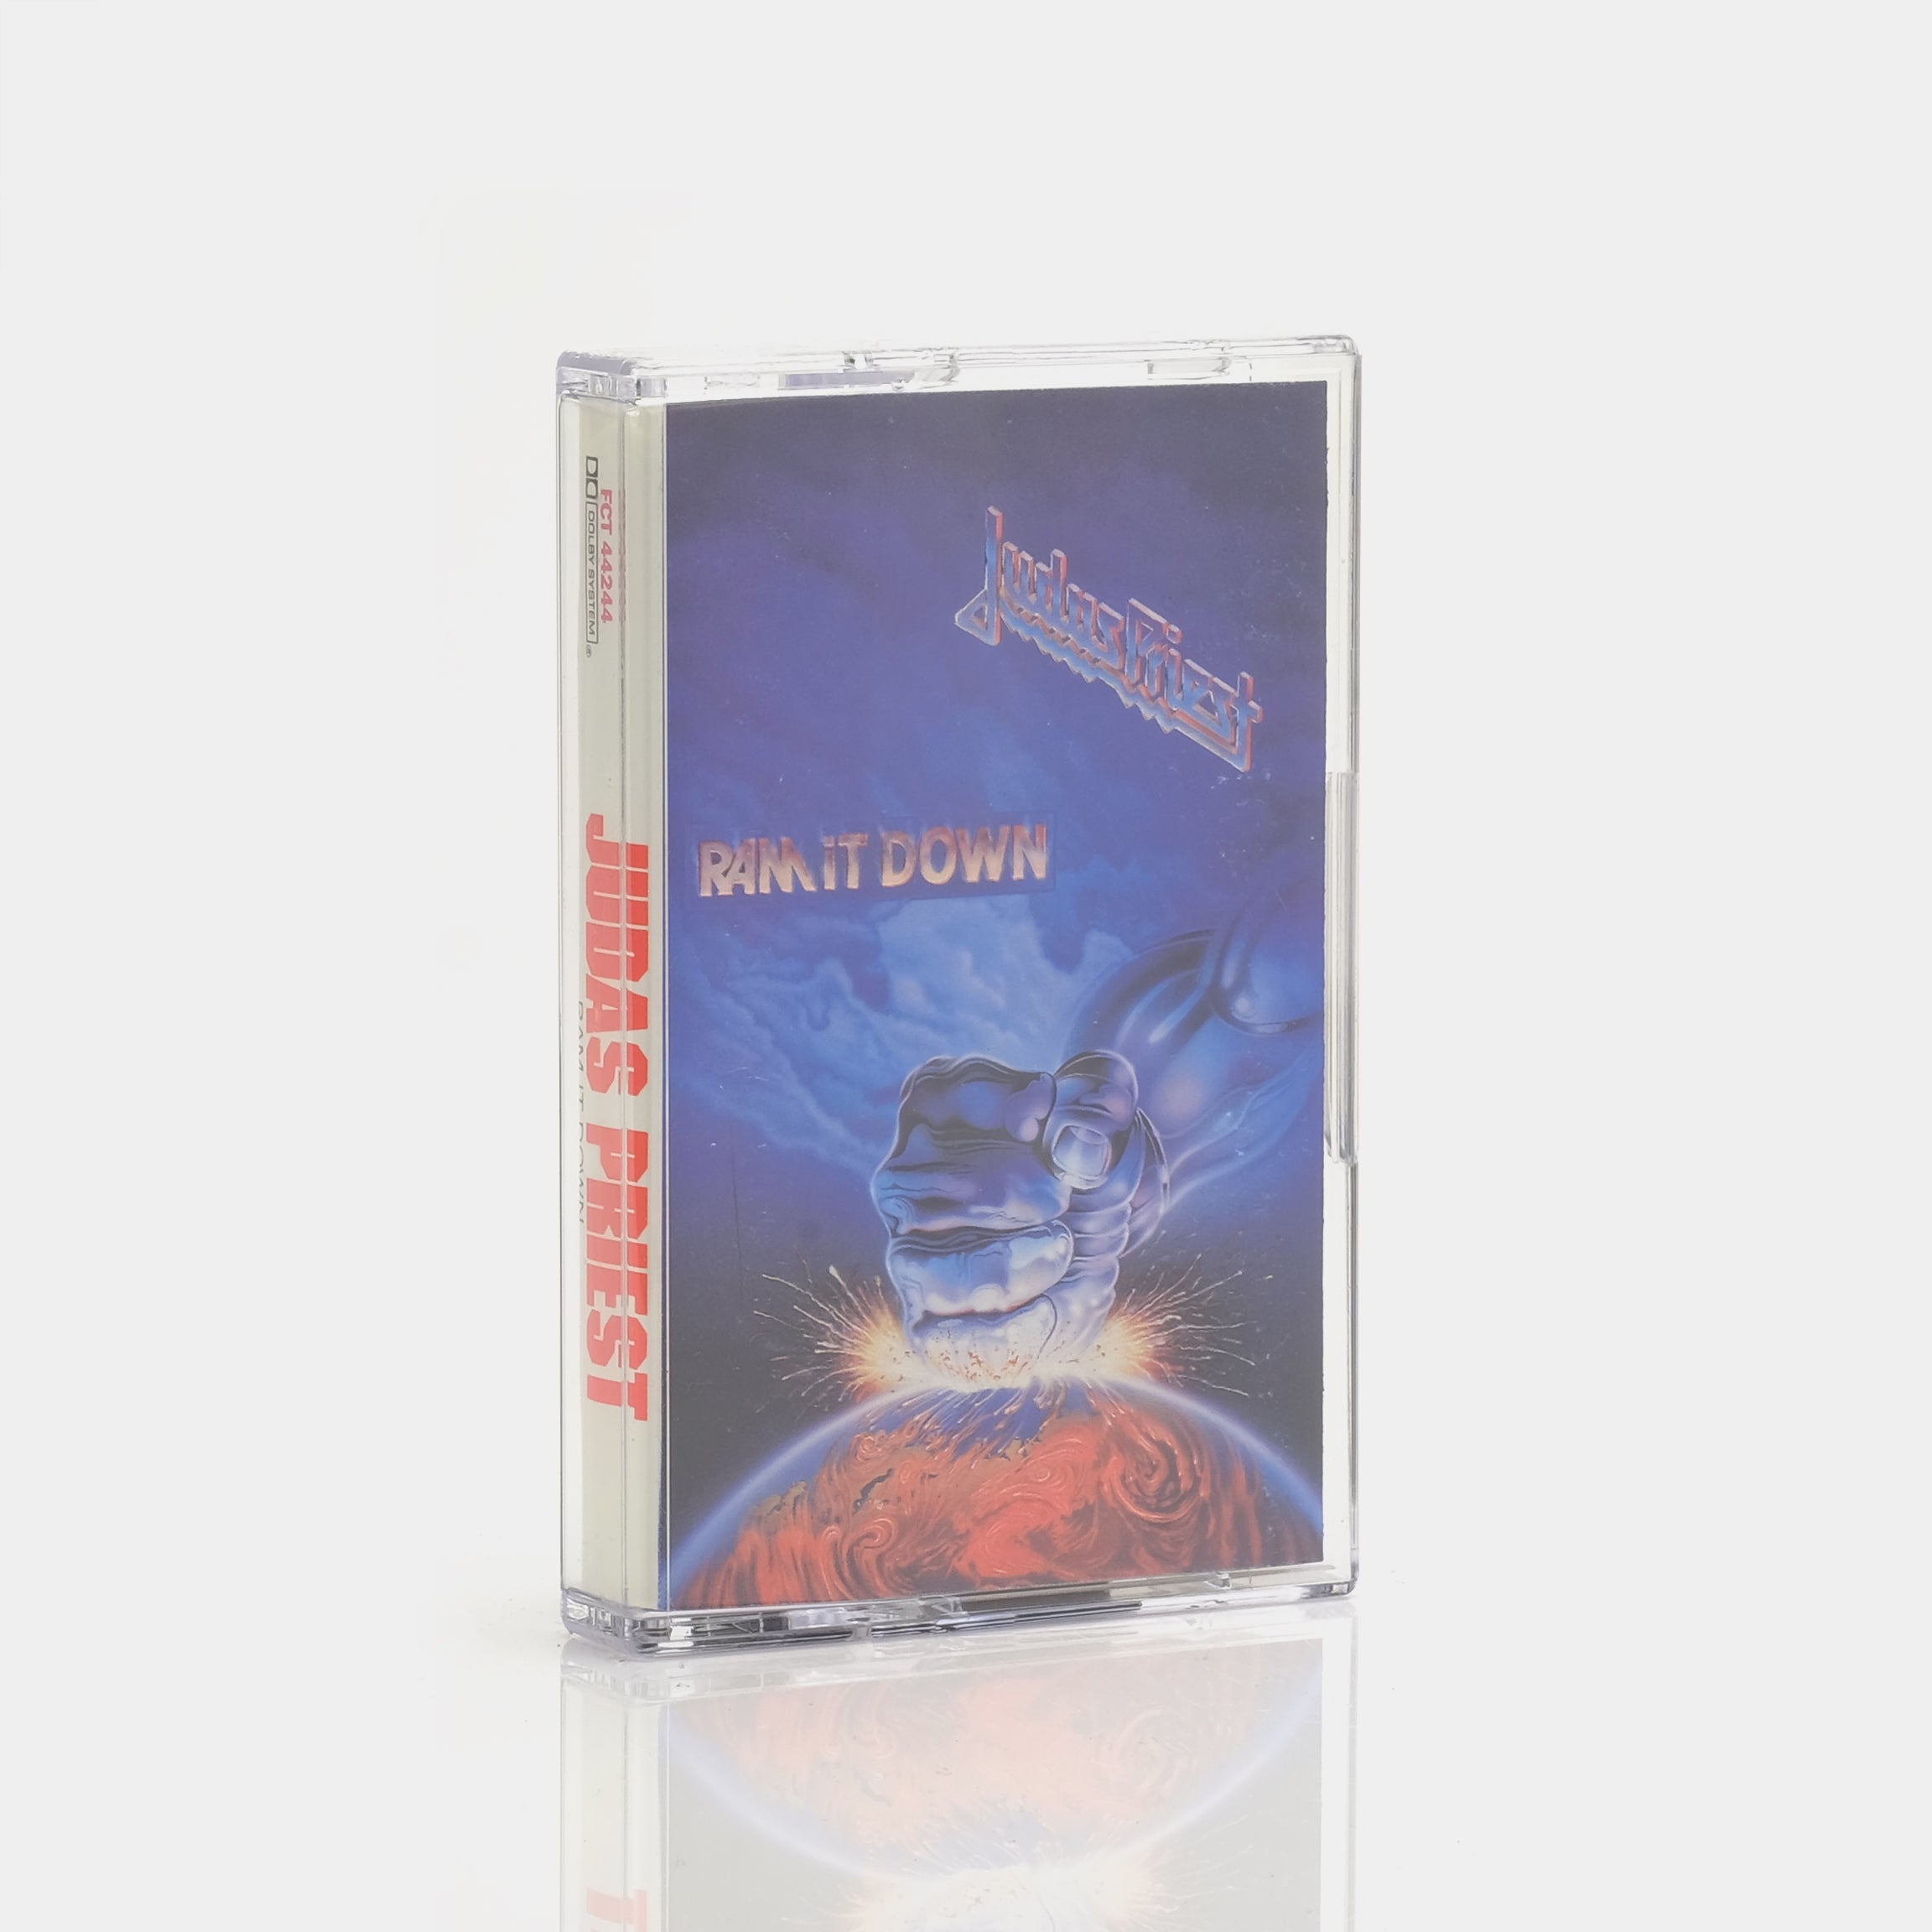 Judas Priest - Ram It Down Cassette Tape